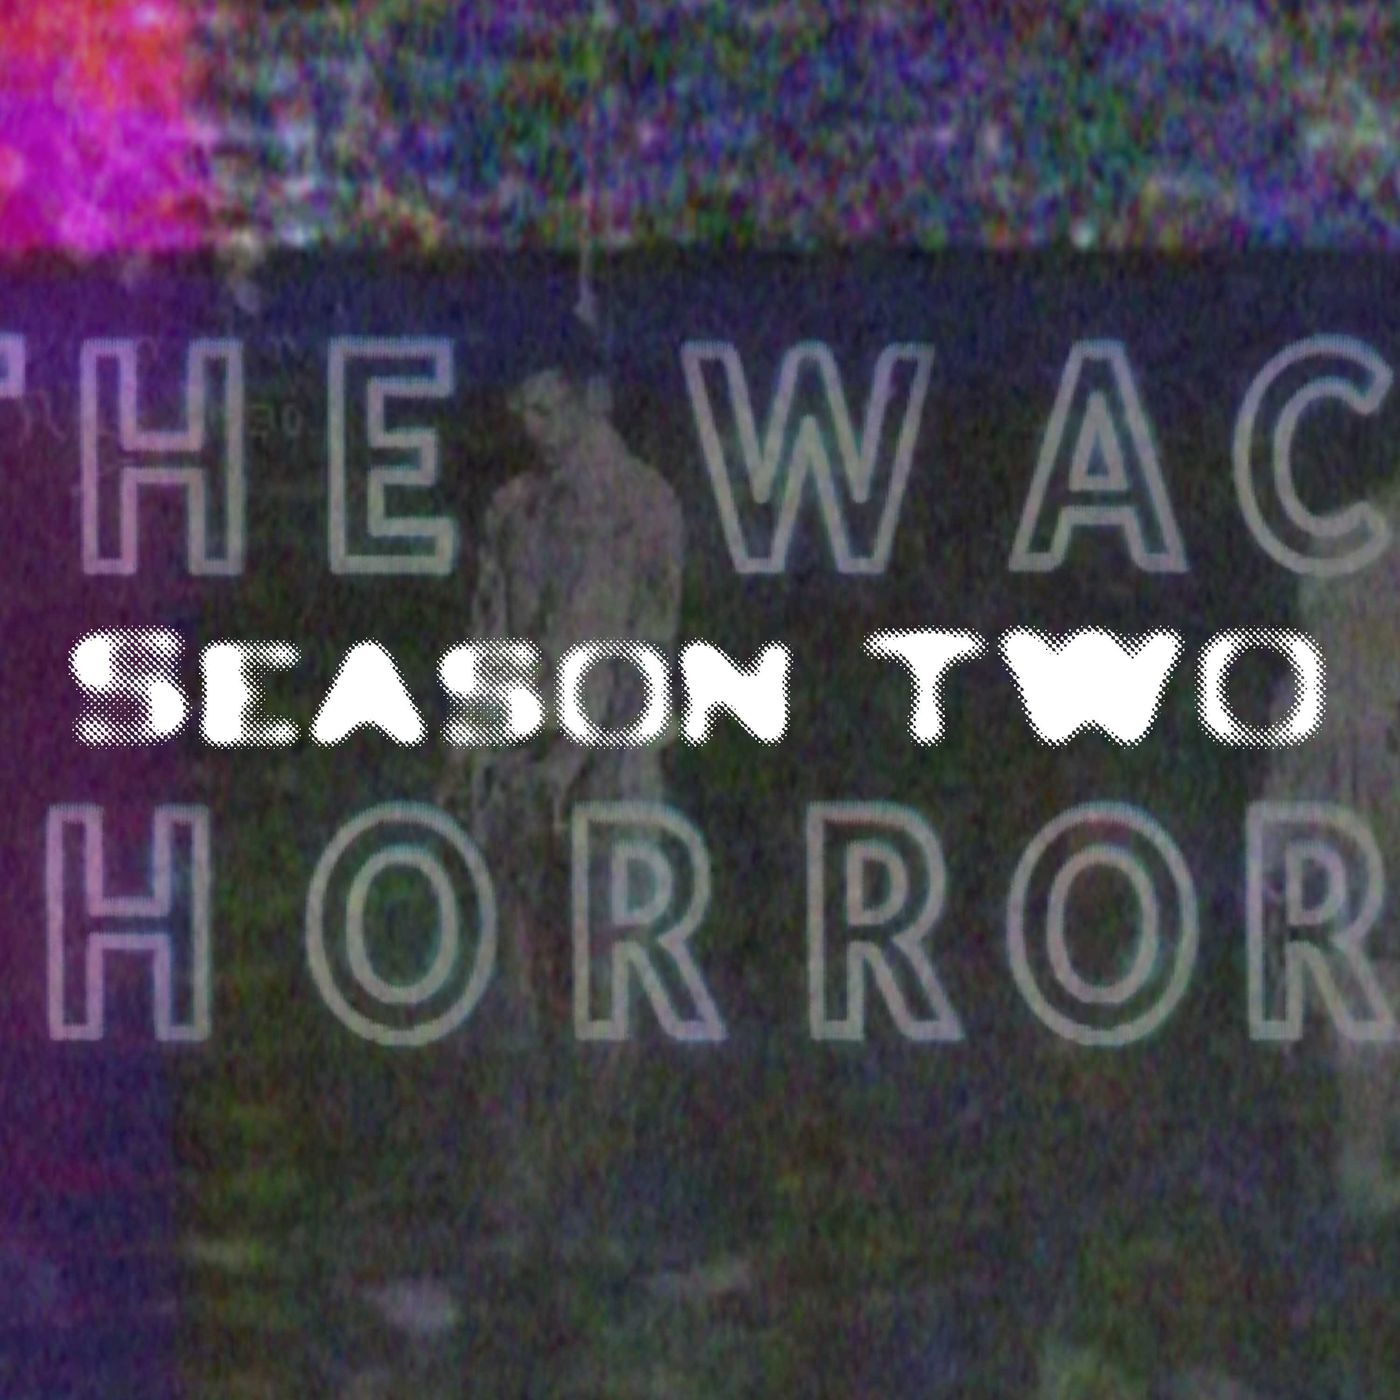 S2, Episode 2: The Waco Horror